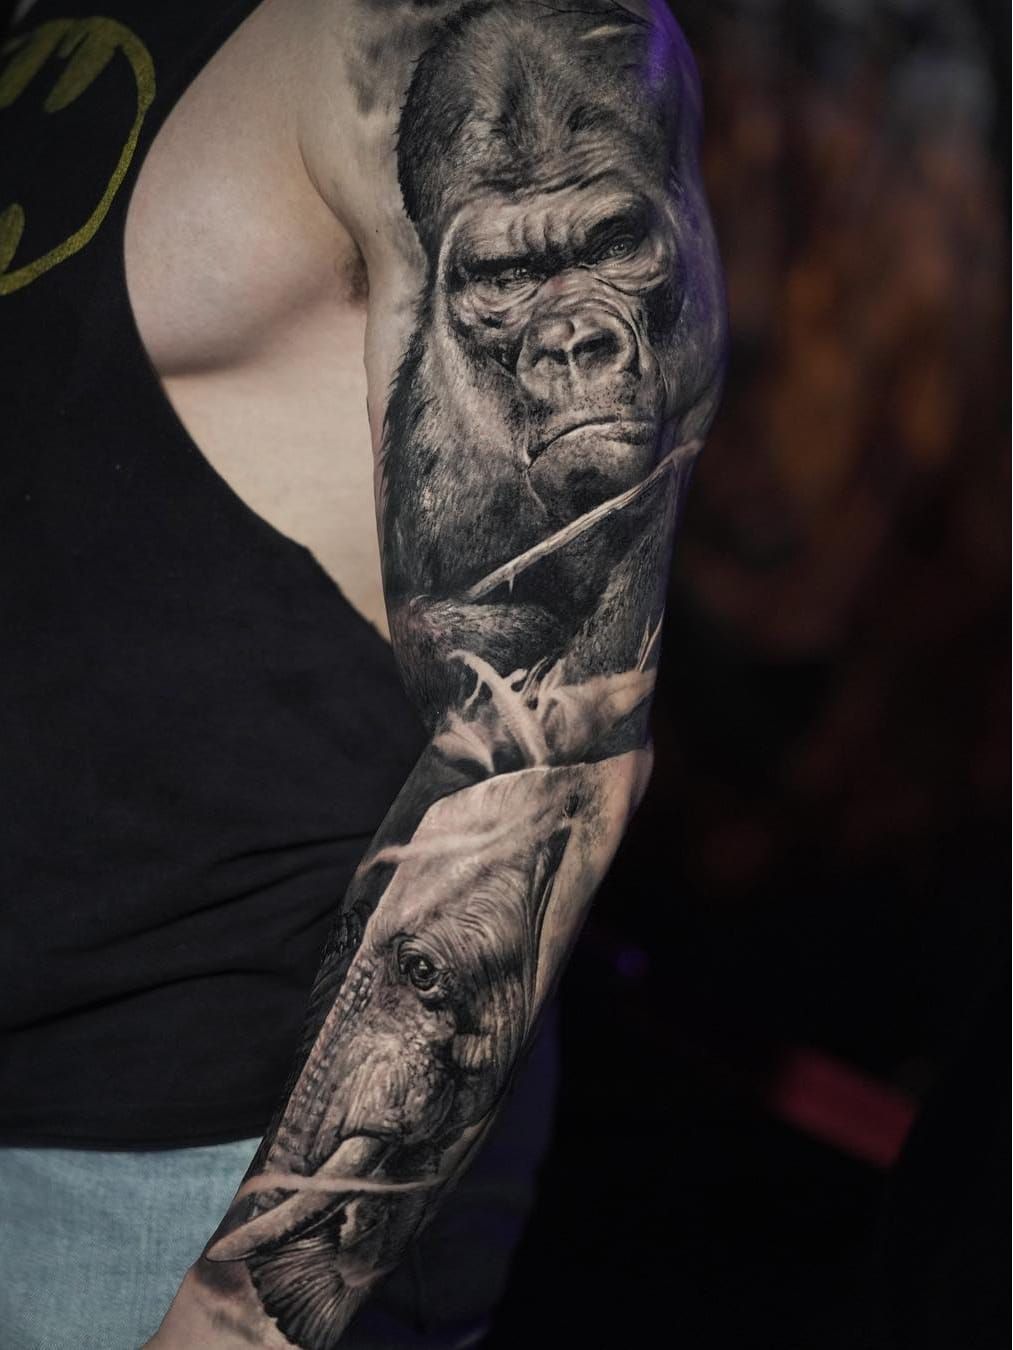 Monkey tattoos 12 ideas for jungle and animal lovers   Онлайн блог о  тату IdeasTattoo